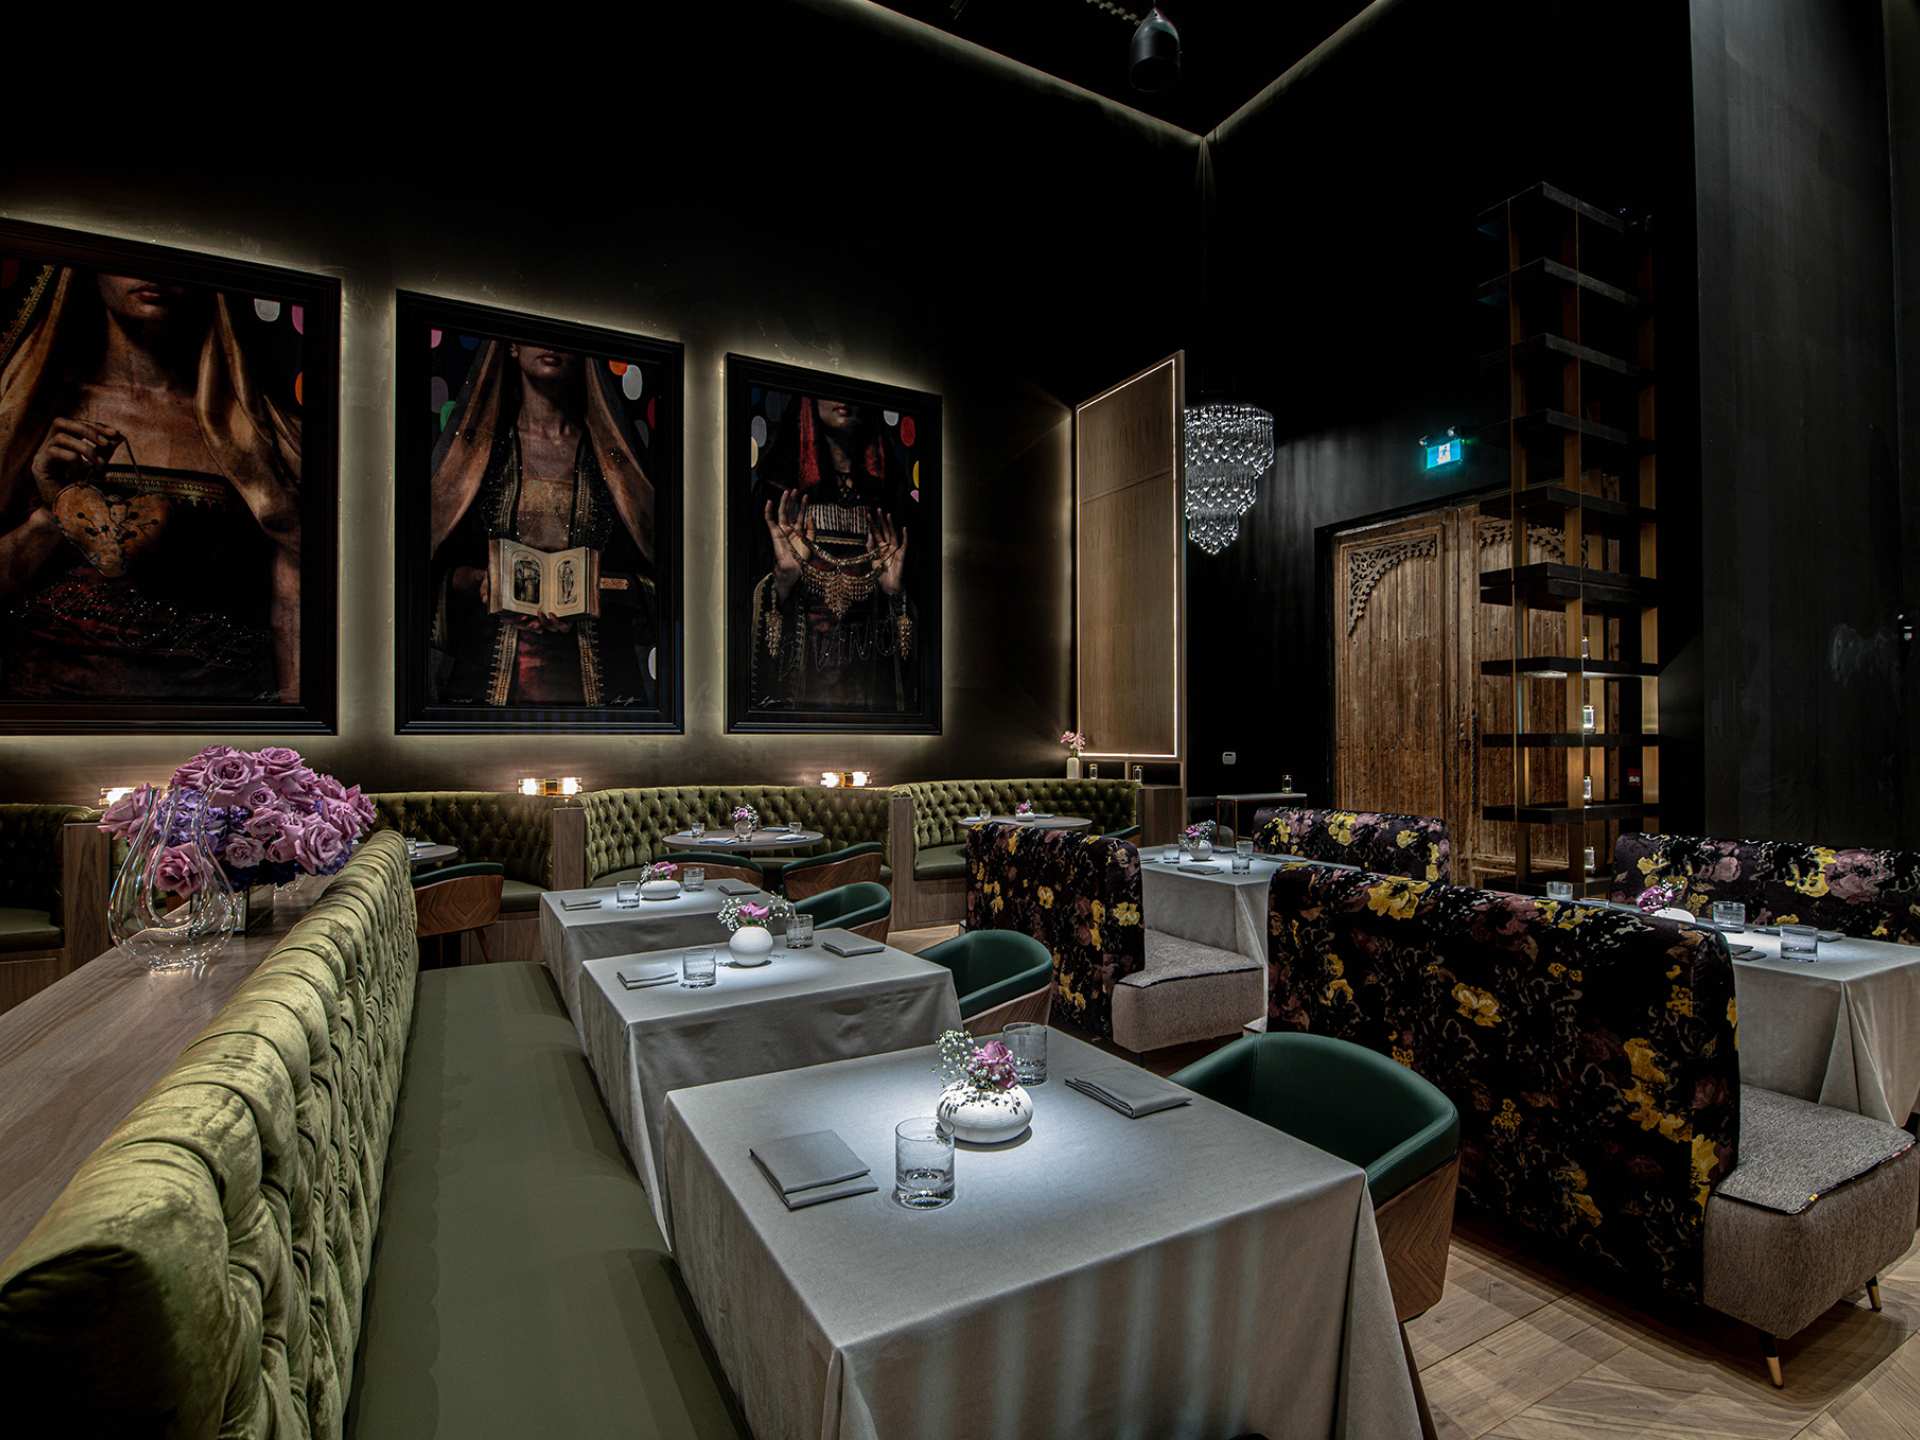 DaNico restaurant | The stunning, opulent interior at DaNico restaurant